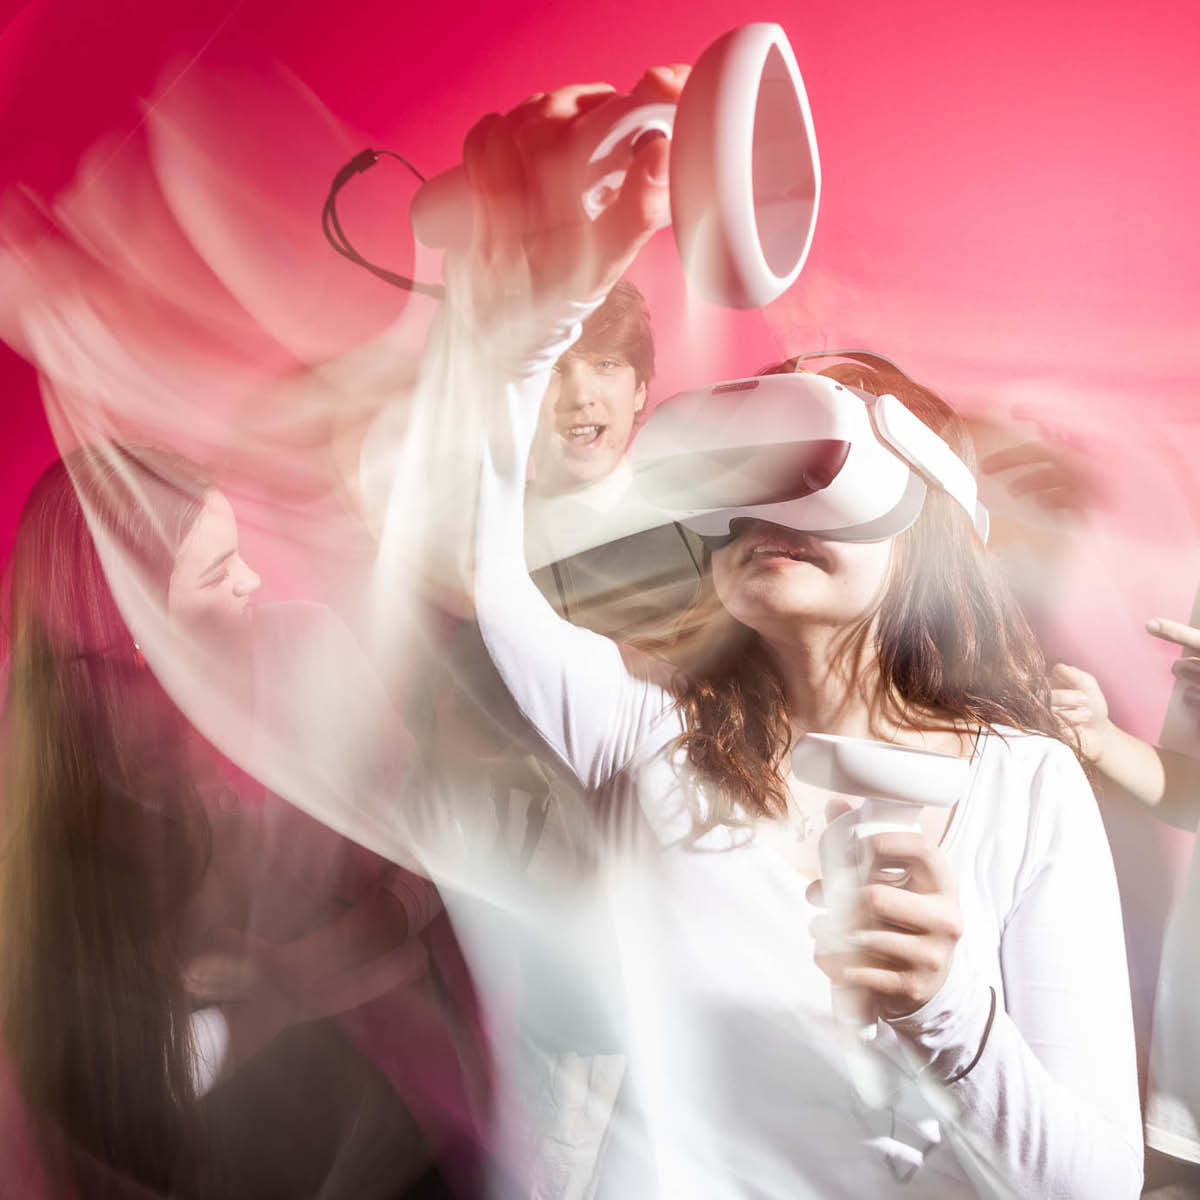 Elever med VR headset i rosa rum.